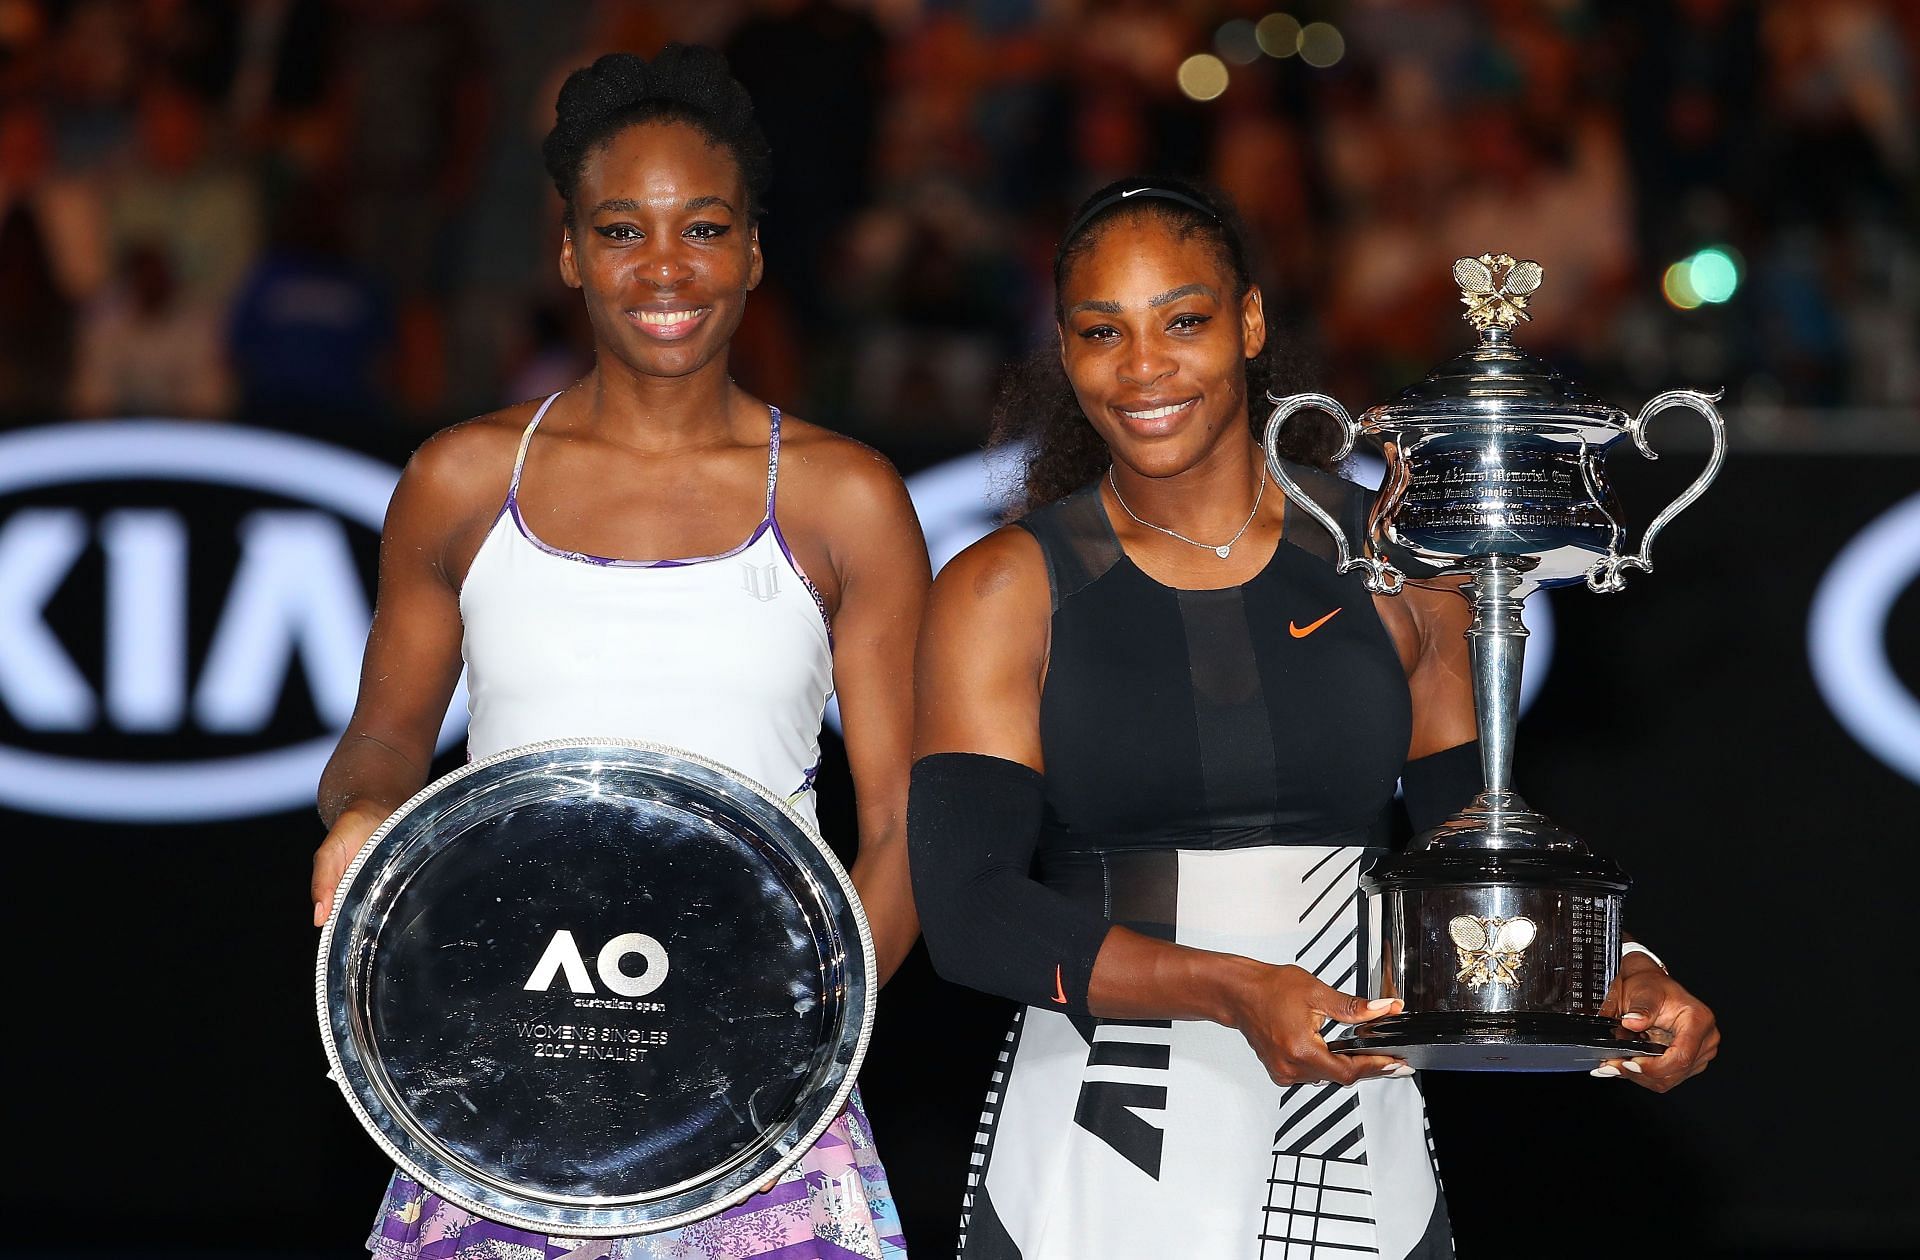 Serena Williams defeated Venus Williams in the 2017 Australian Open final